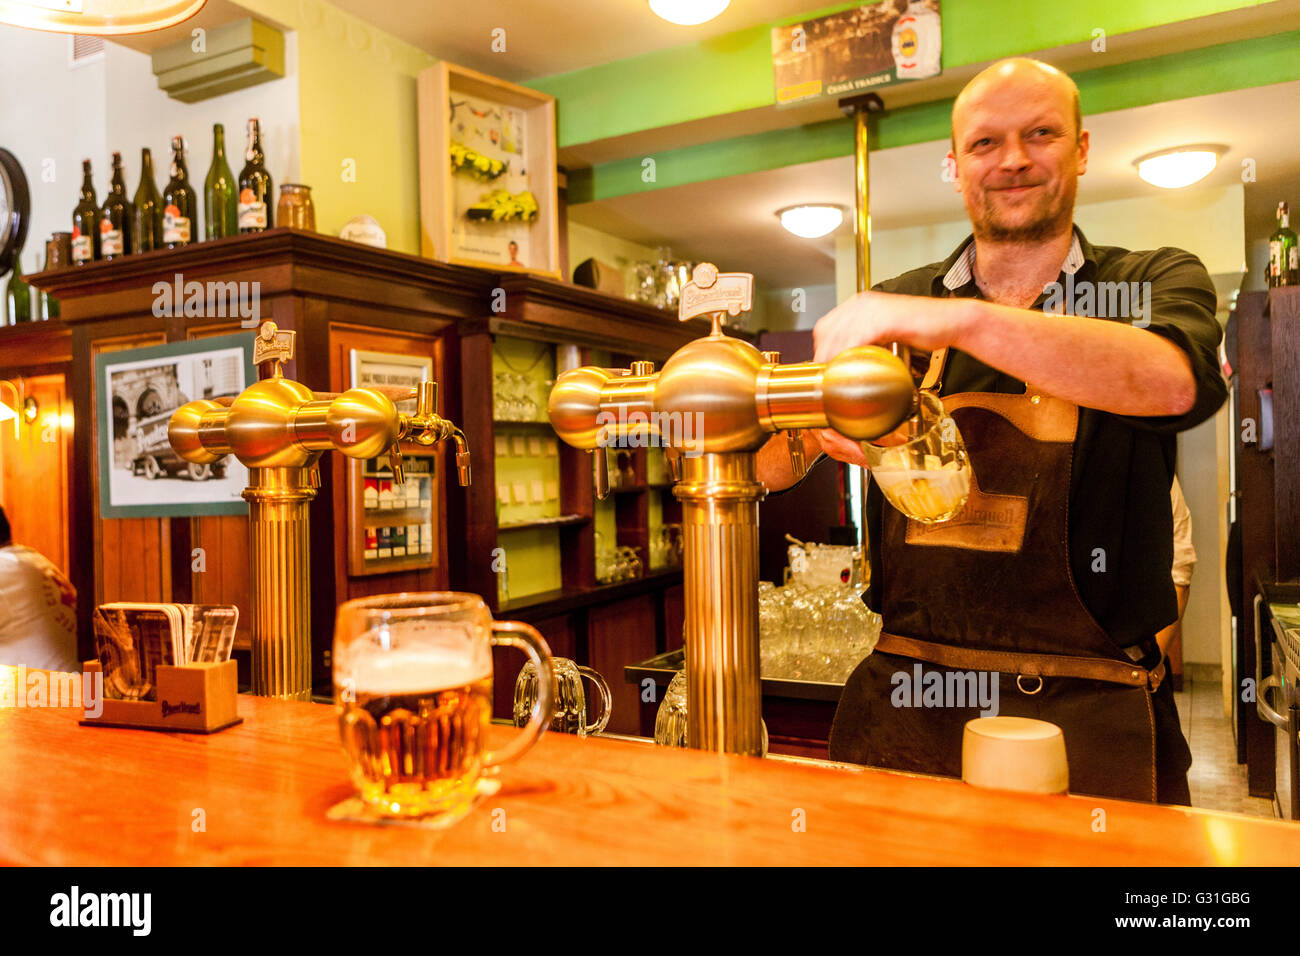 Originale birra Pilsner in Pilsen Repubblica Ceca famoso ristorante e pub 'U Salzmannu' Man tirare una pinta di birra, birra ceca Pilsner Urquell birra Foto Stock